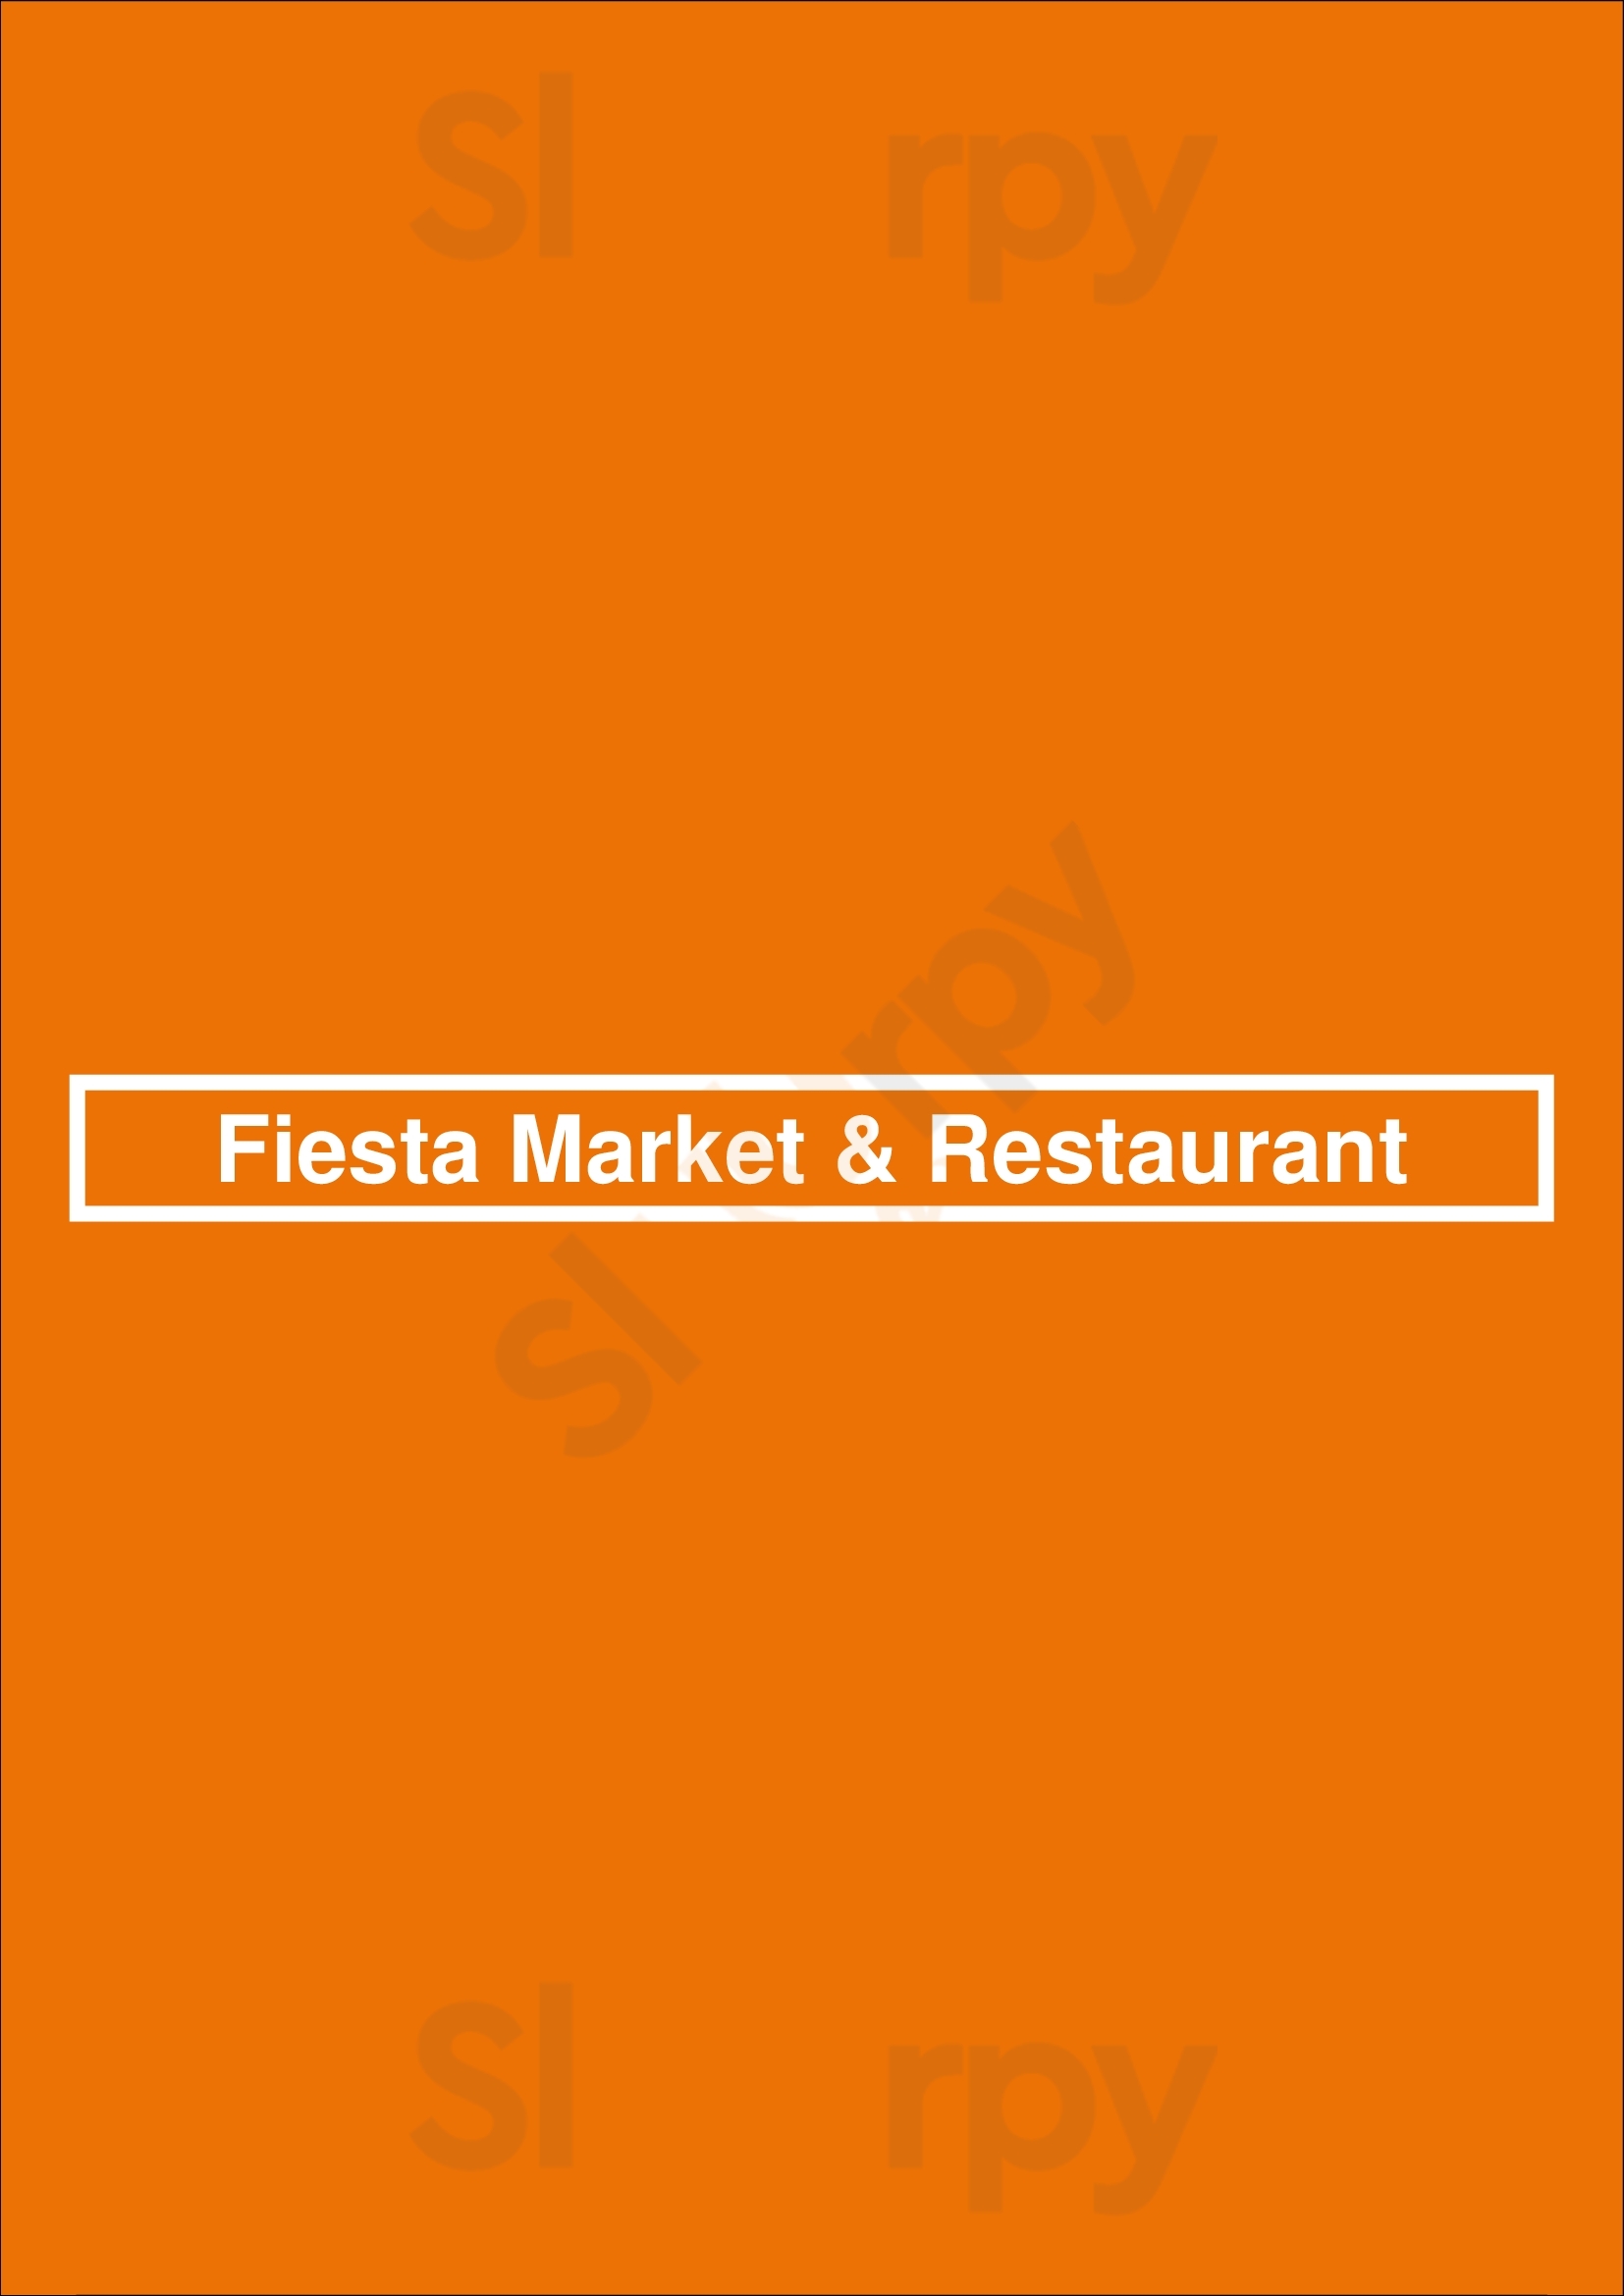 Fiesta Market & Restaurant Calgary Menu - 1